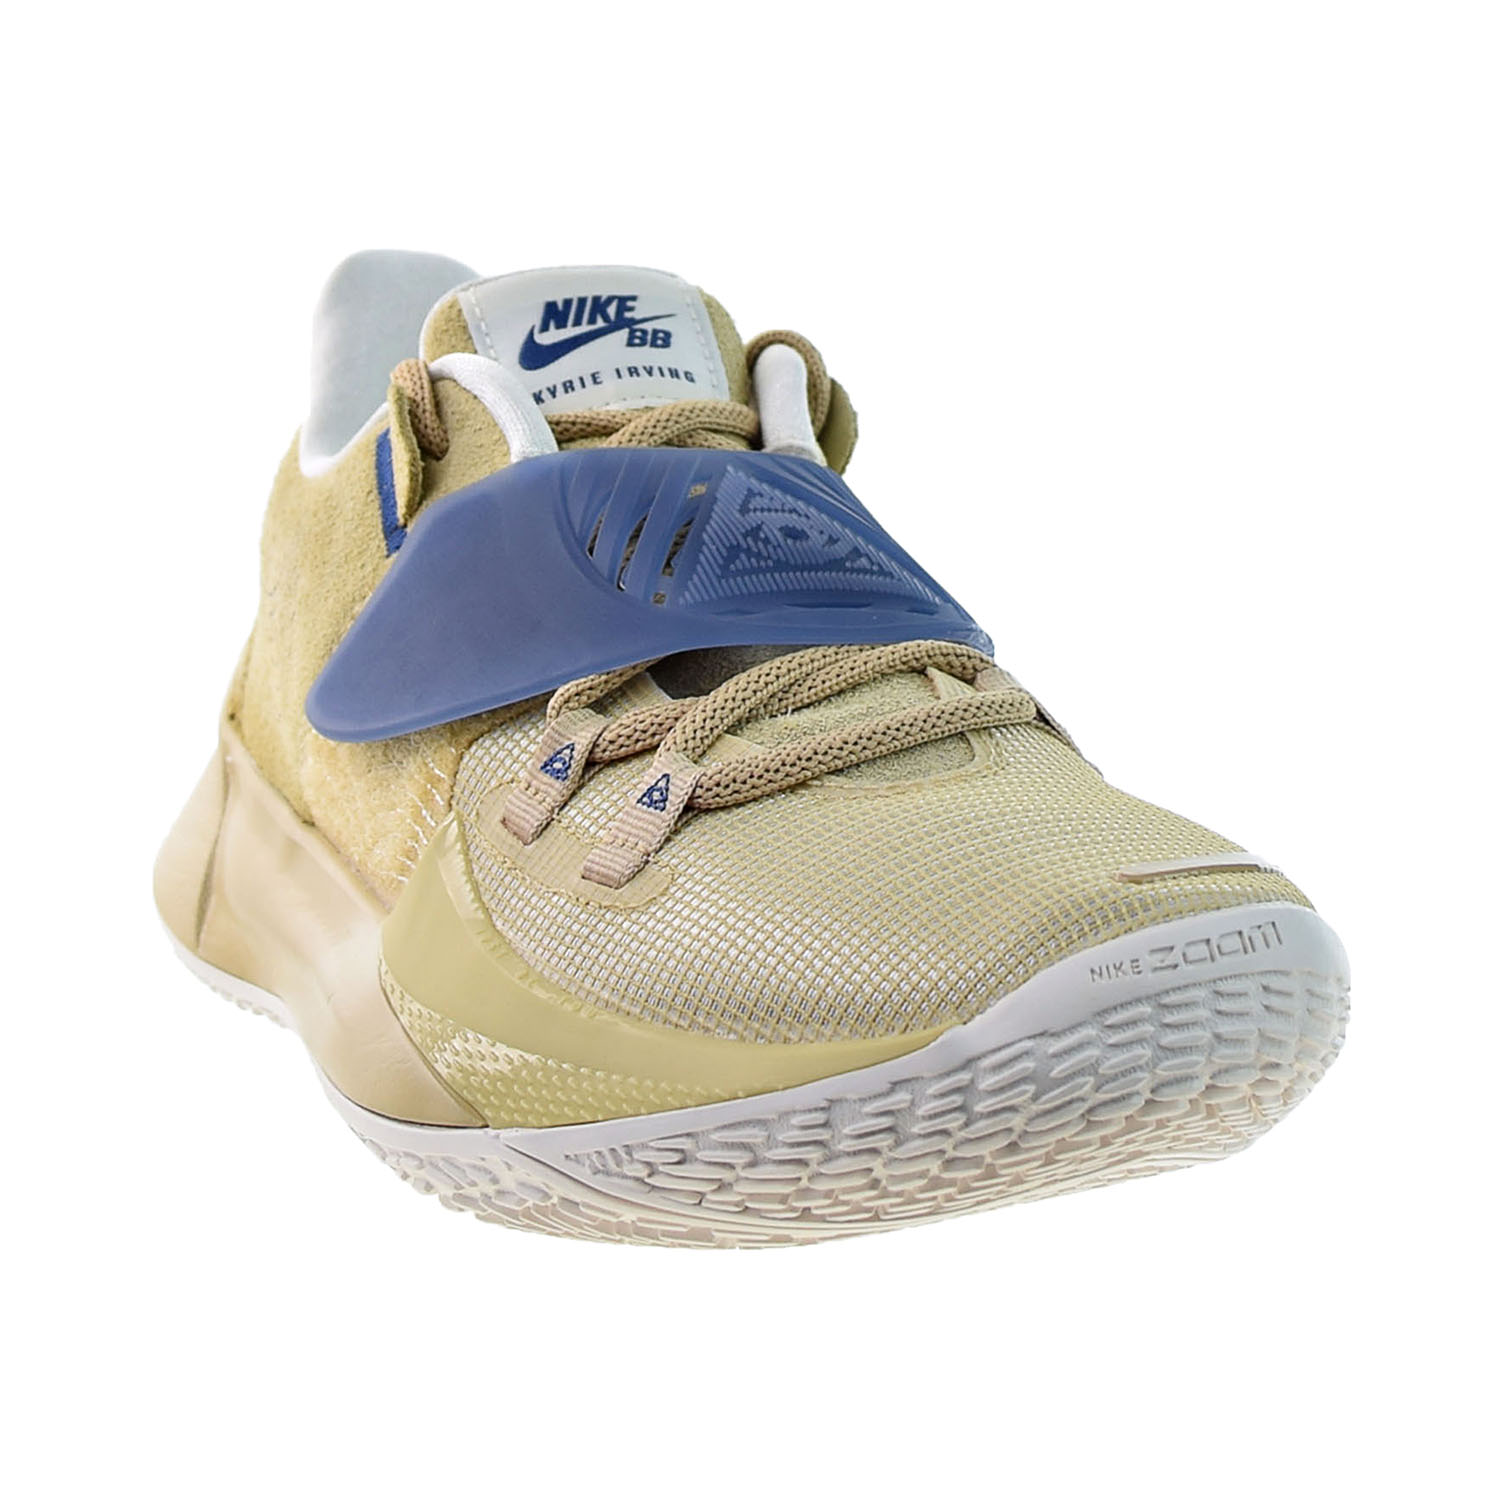 Nike Kyrie Low 3 'Sashiko' Men's Basketball Shoes Sesame-Sail-Mystic Navy da6805-200 - image 2 of 6